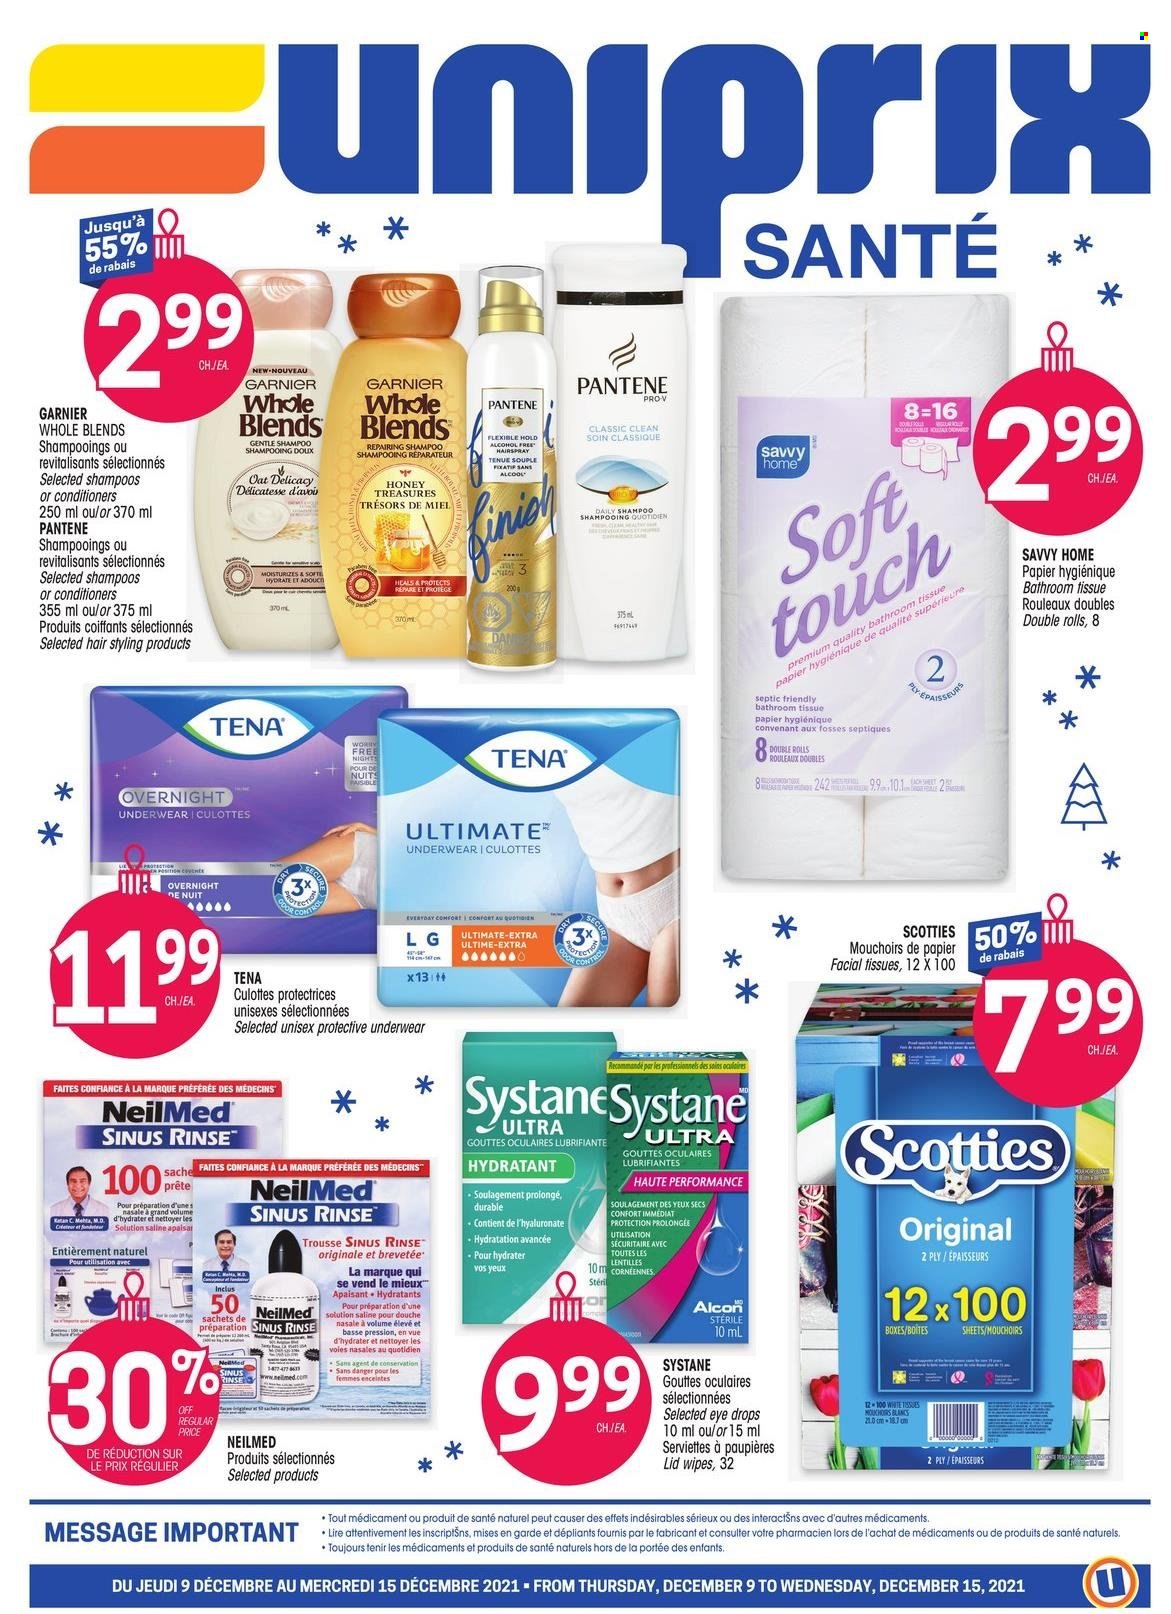 thumbnail - Uniprix Santé Flyer - December 09, 2021 - December 15, 2021 - Sales products - oats, wipes, bath tissue, facial tissues, eye drops, Garnier, shampoo, Systane, Pantene. Page 1.